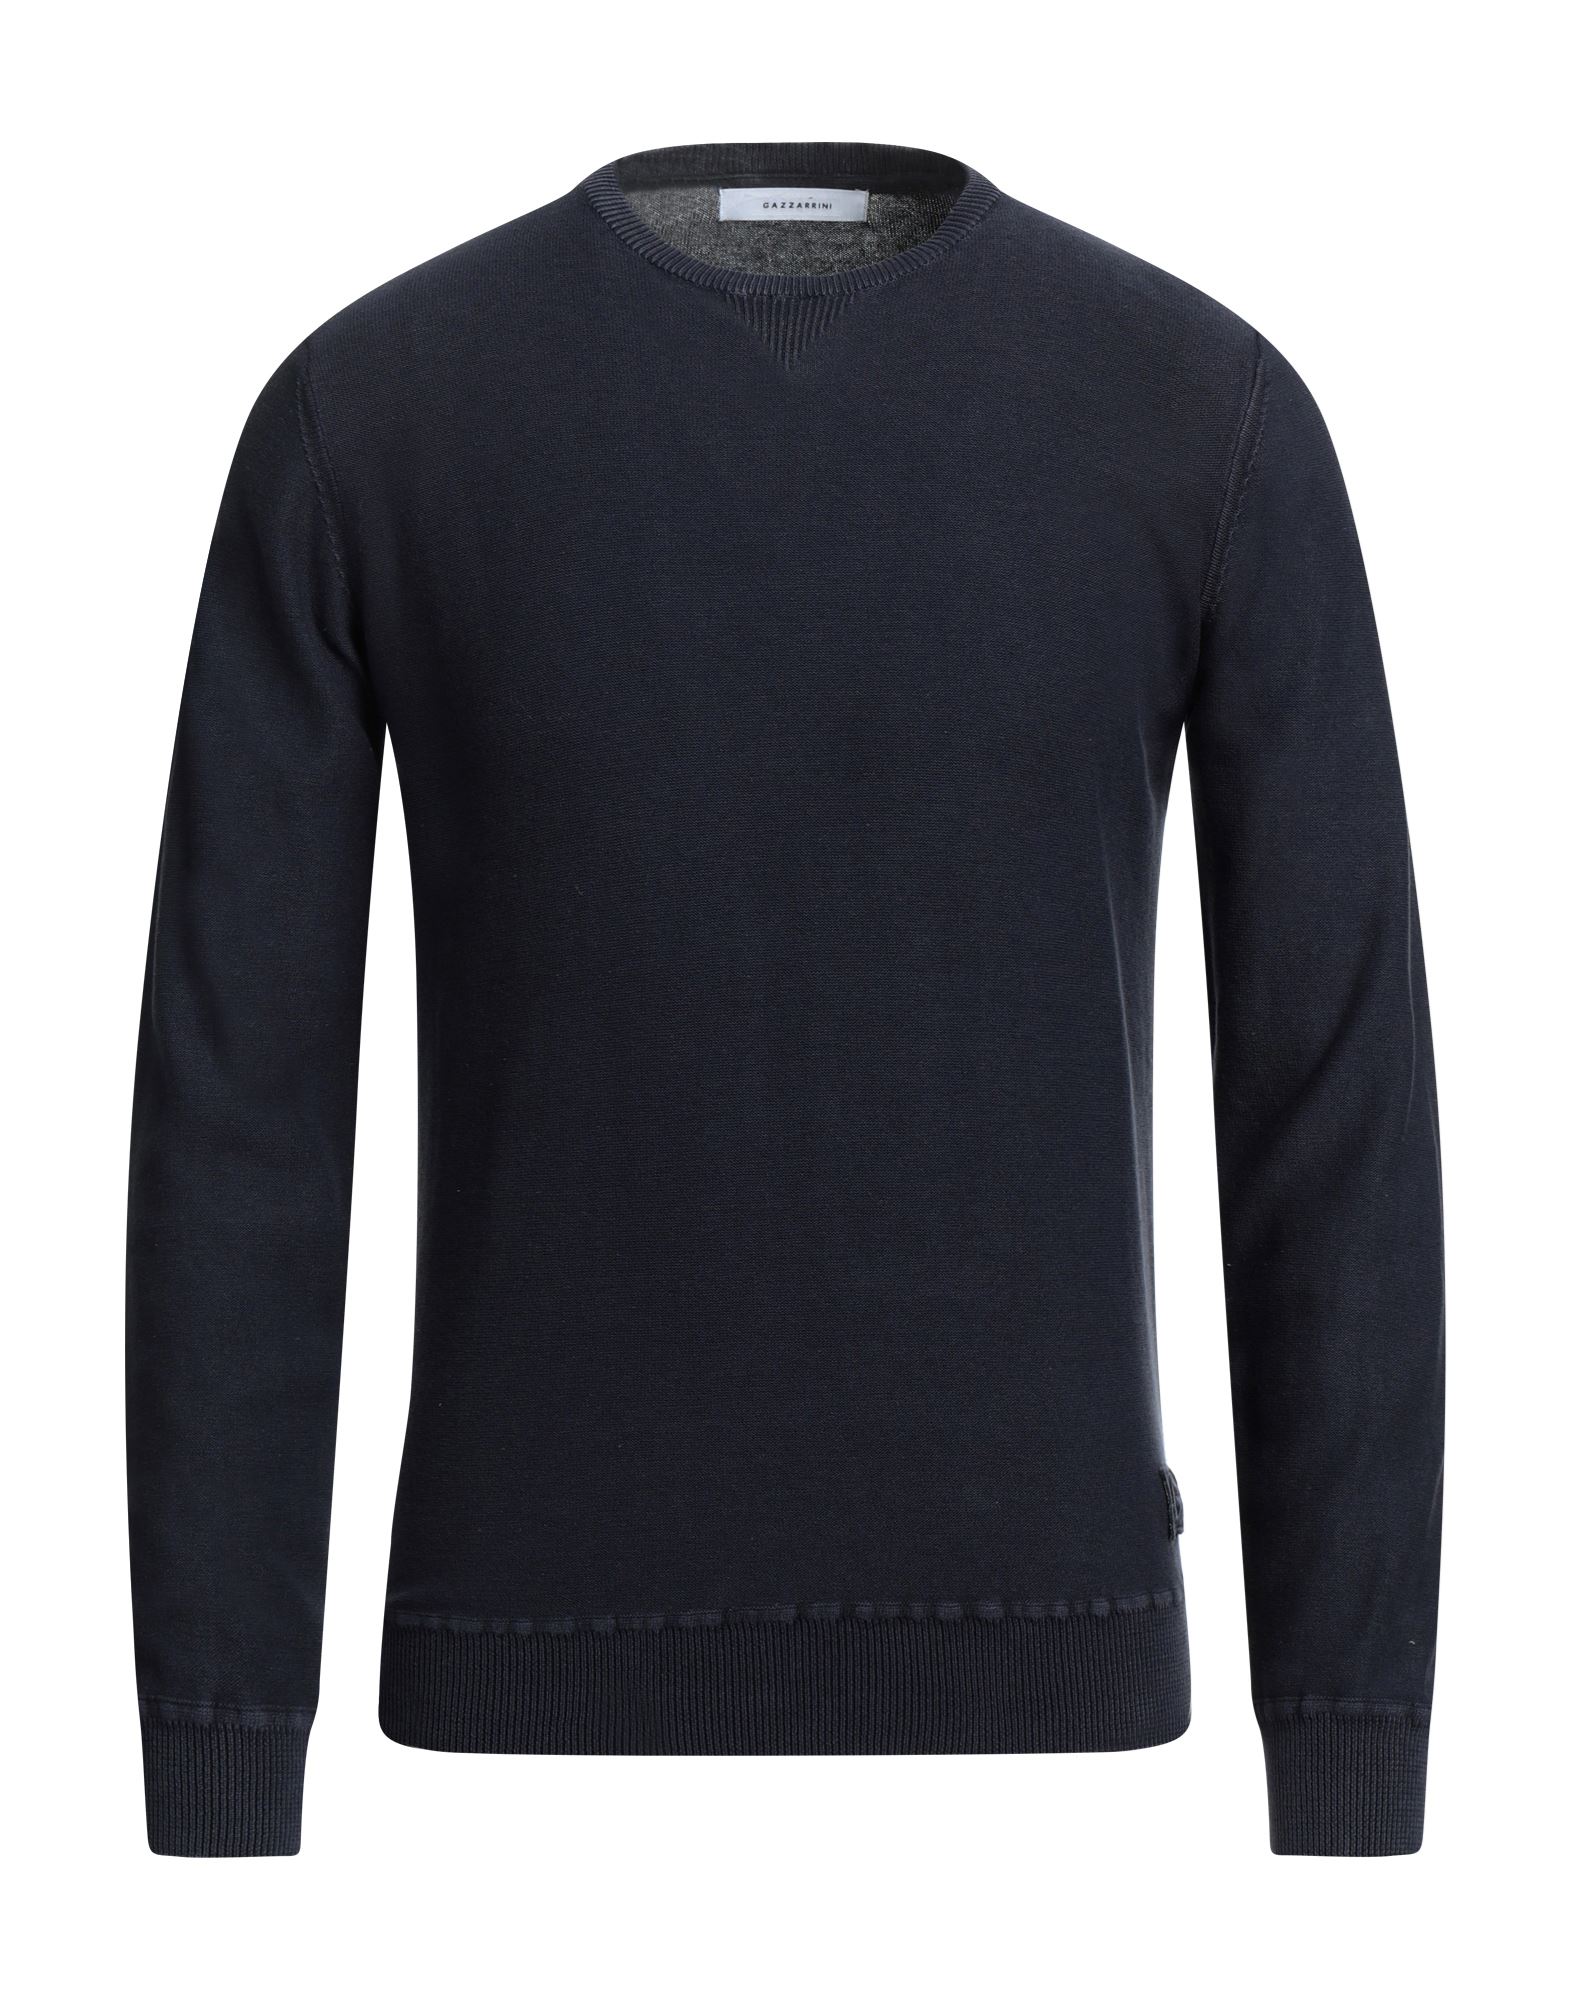 Gazzarrini Man Sweater Midnight Blue Size M Cotton